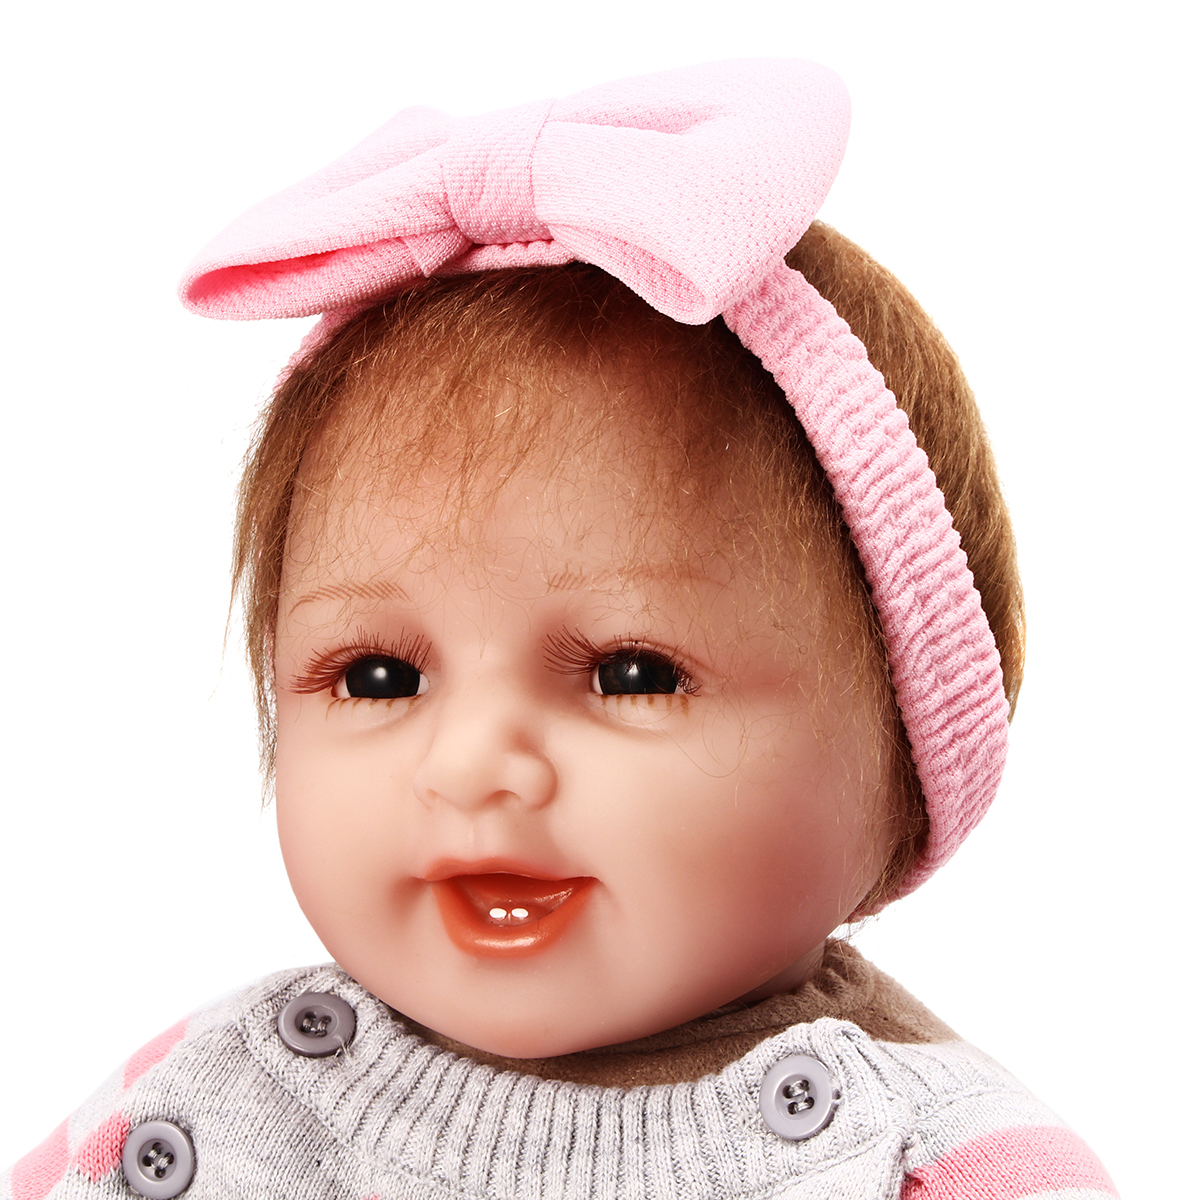 New-Newborn-Reborn-Baby-Girl-22quot-Lifelike-Doll-Realistic-Toy-Christmas-Gift-1339756-9